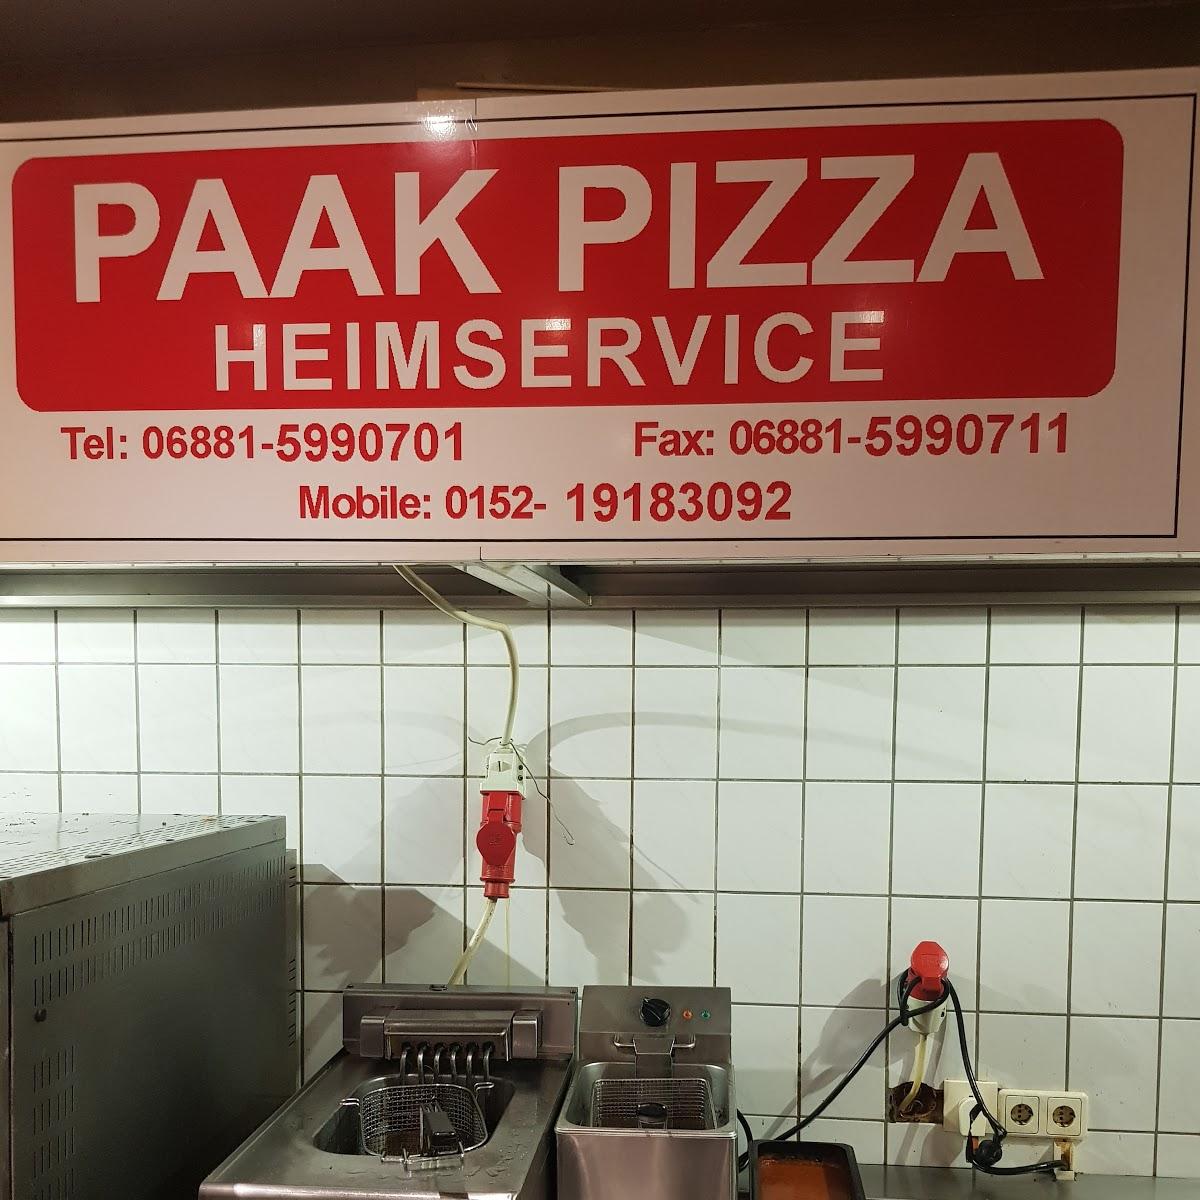 Restaurant "Paak Pizza Heimservice" in Lebach